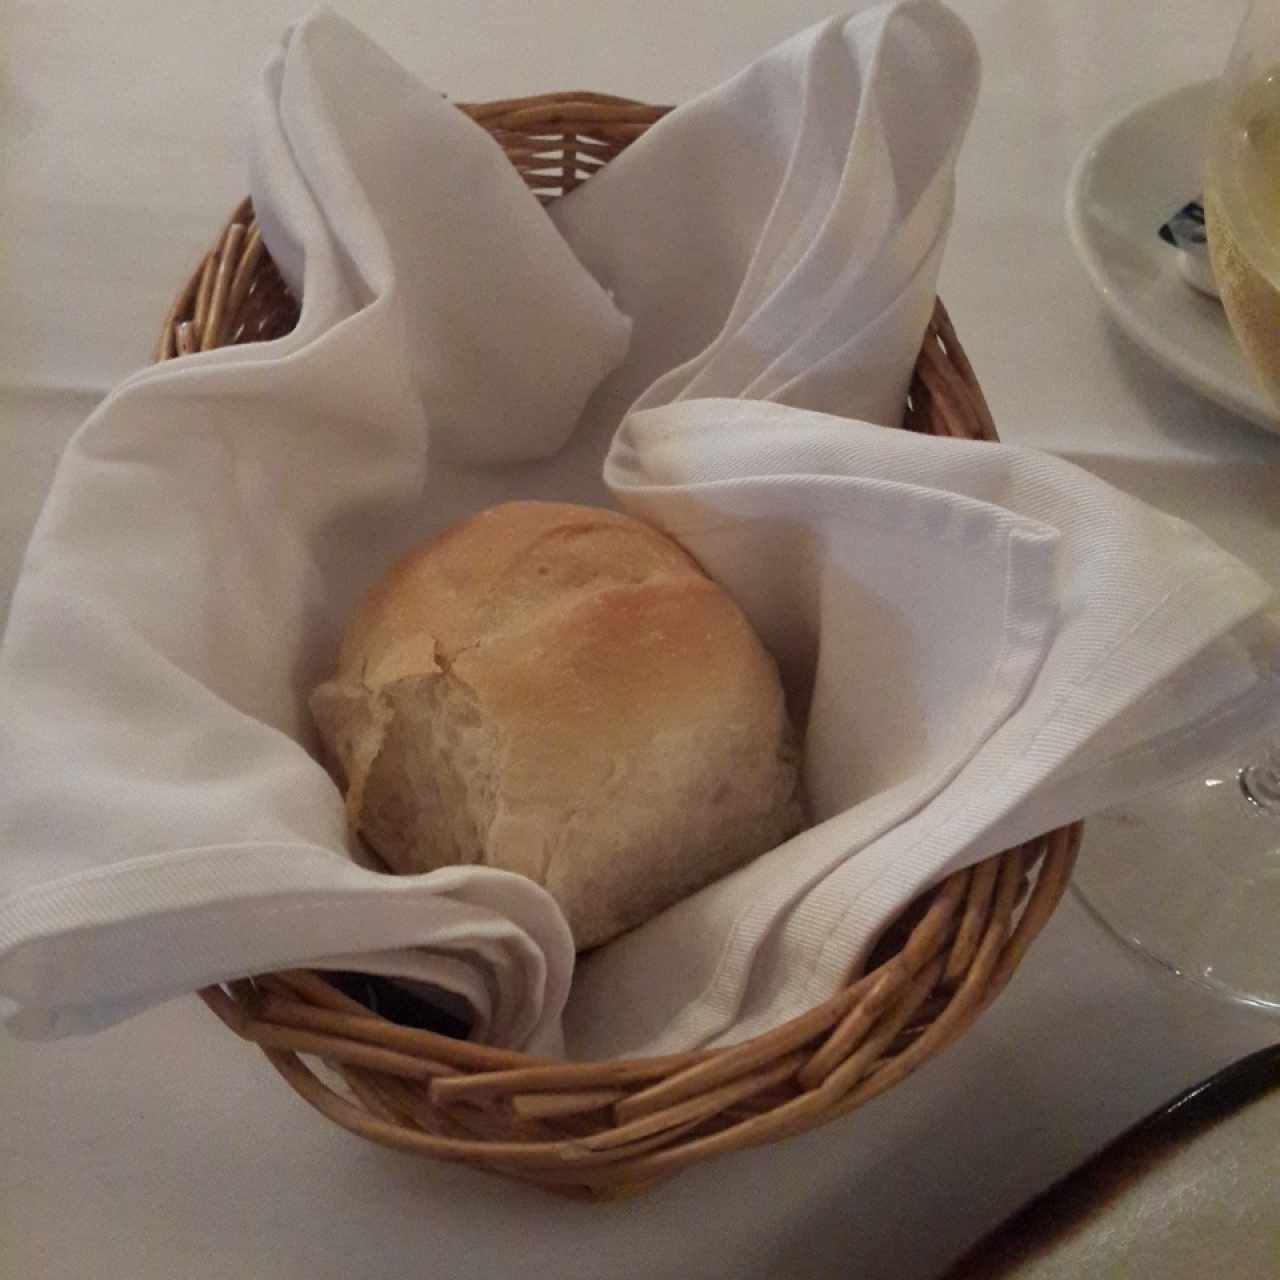 Pan de la Casa